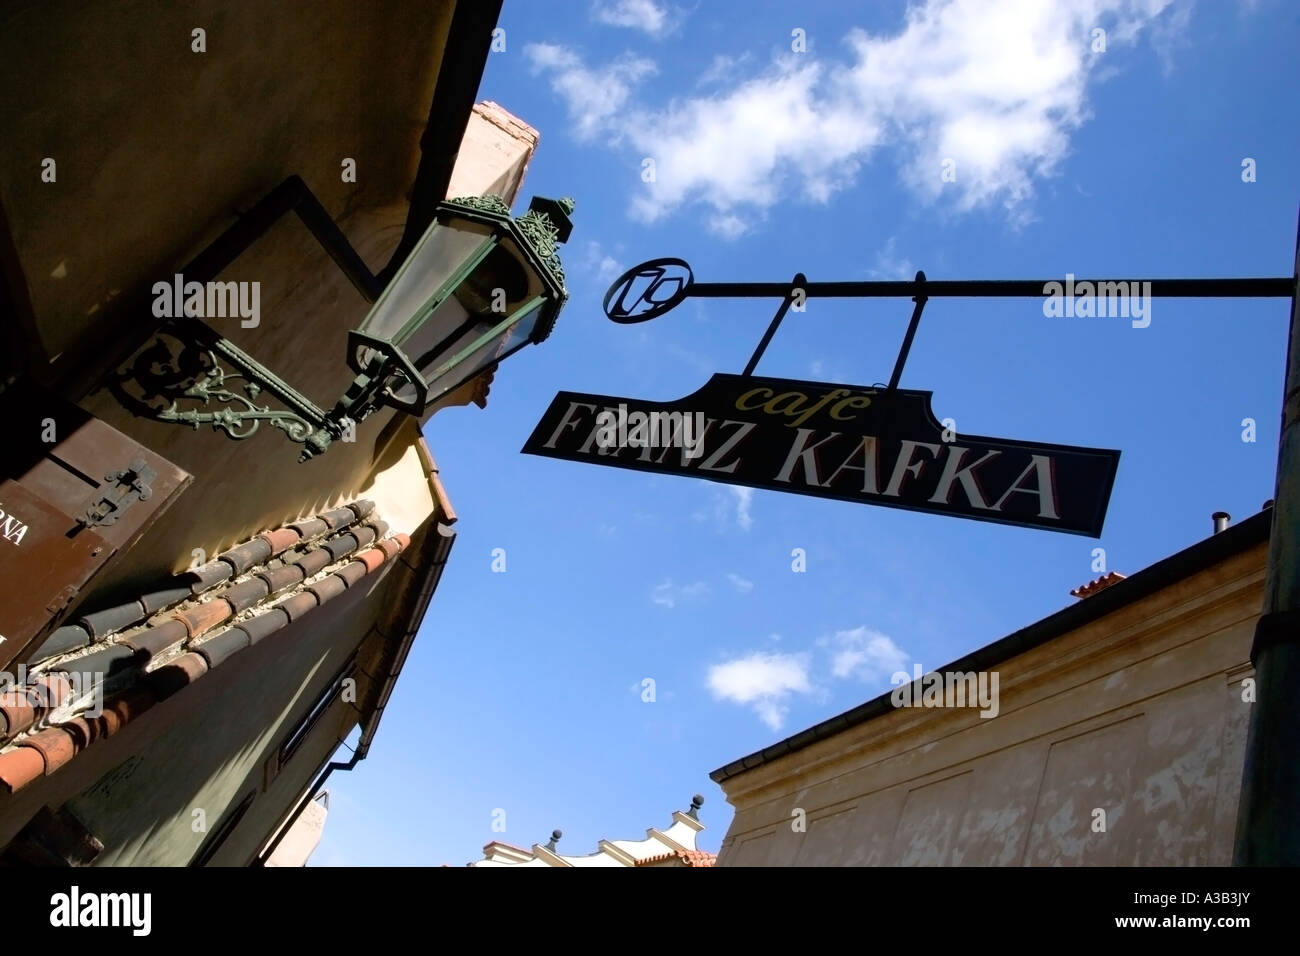 CZECH REPUBLIC Czechia Bohemia Prague Castle Hradcany Hanging sign for the Franz Kafka Cafe in Golden Lane Stock Photo